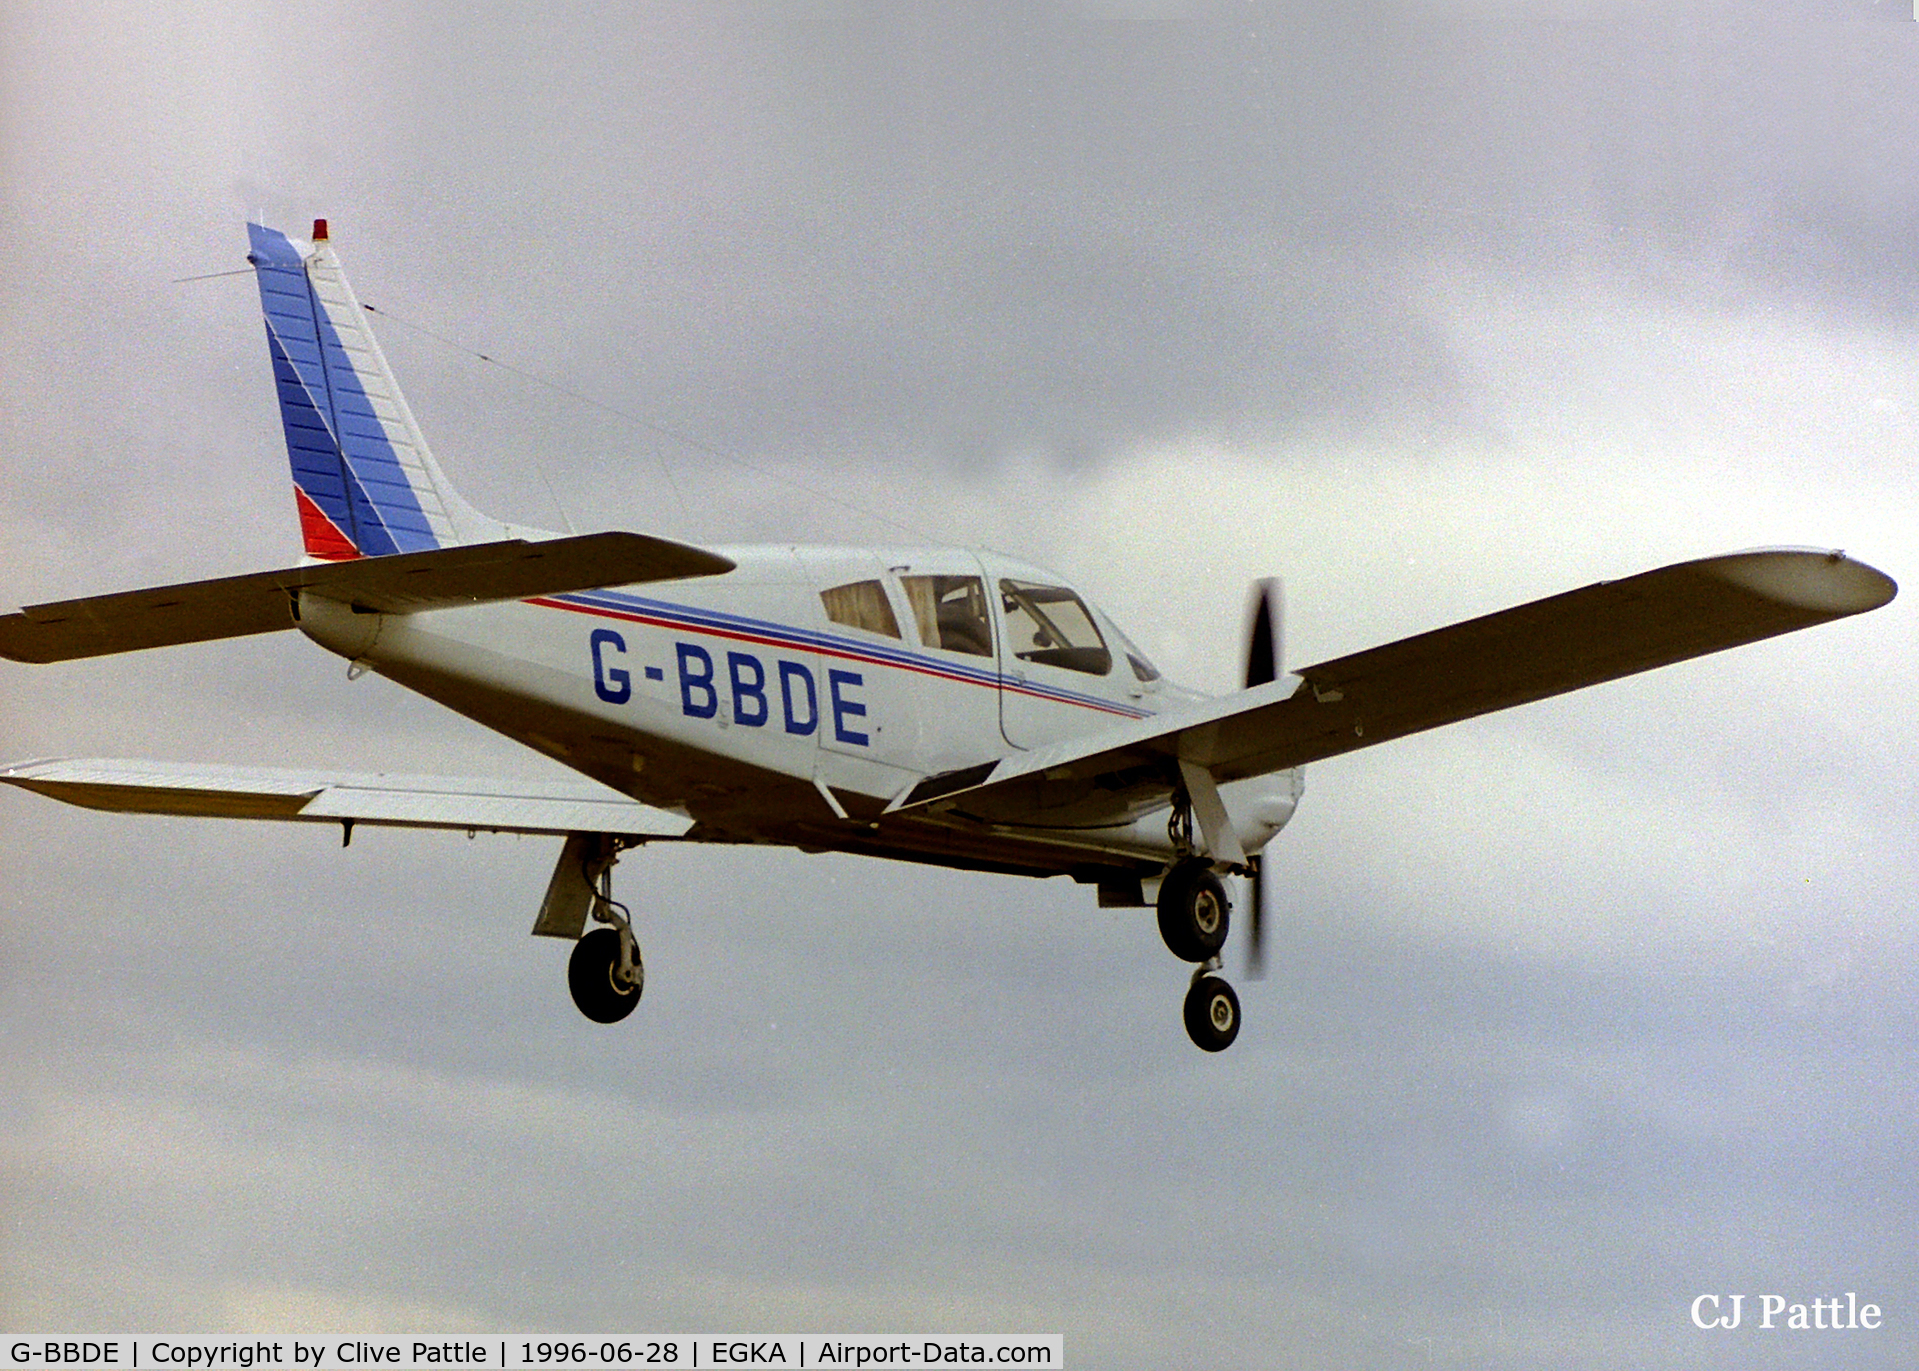 G-BBDE, 1973 Piper PA-28R-200-2 Cherokee Arrow II C/N 28R-7335250, On short finals to land at Shoreham EGKA